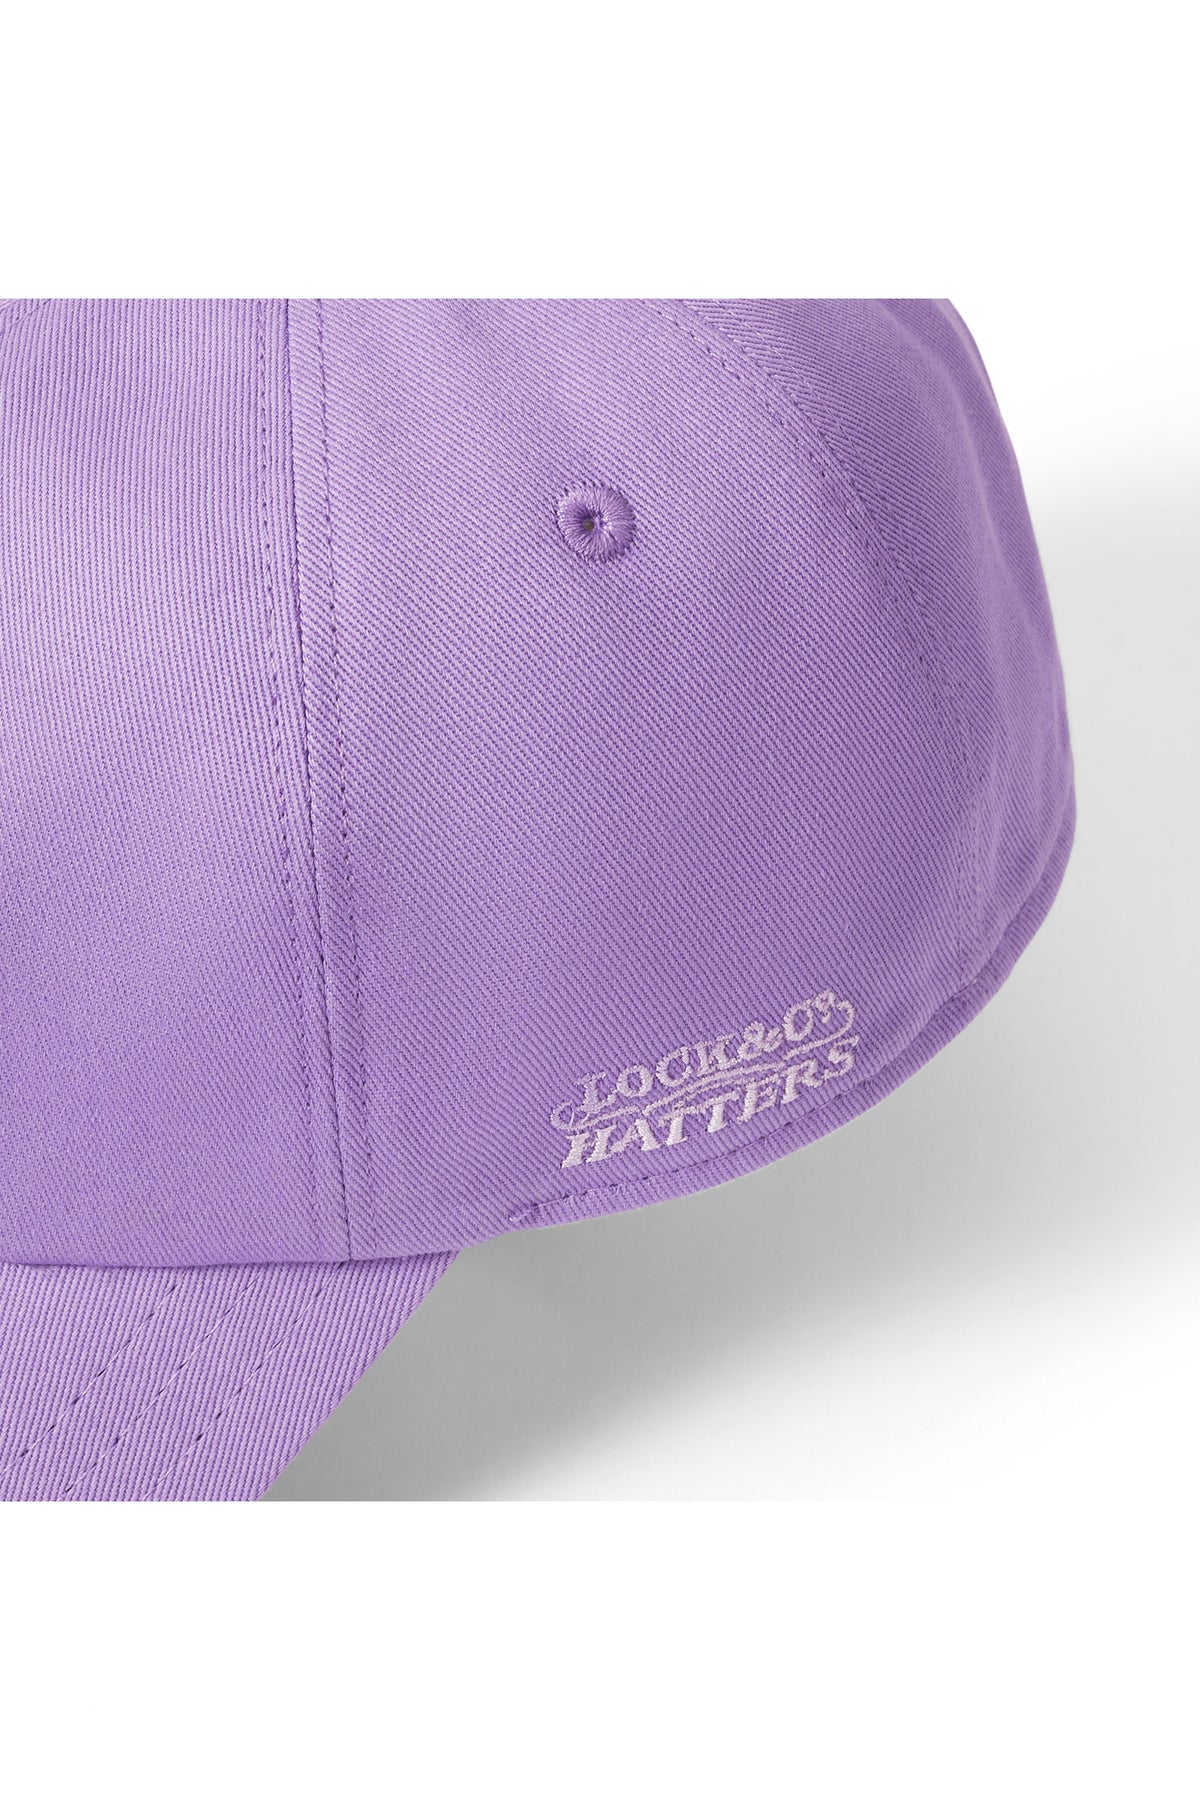 Adjustable Purple Baseball Cap - Lock & Co. Hats for Men & Women